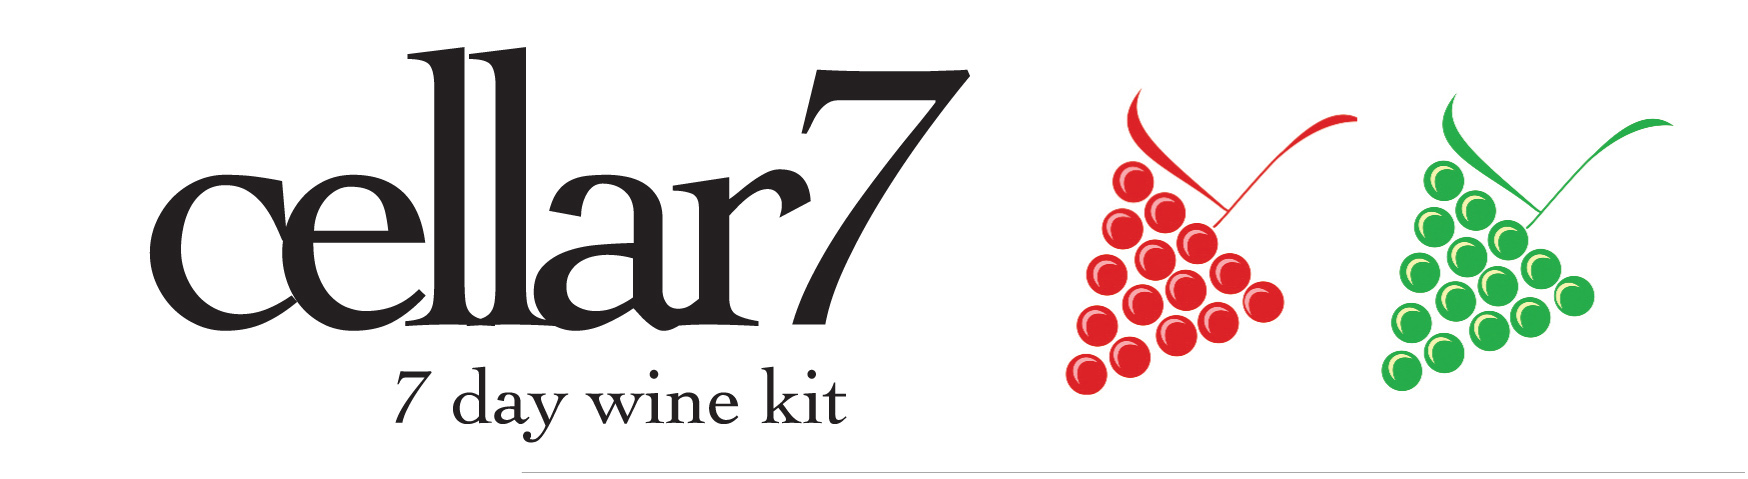 Cellar7 7 day wine kits